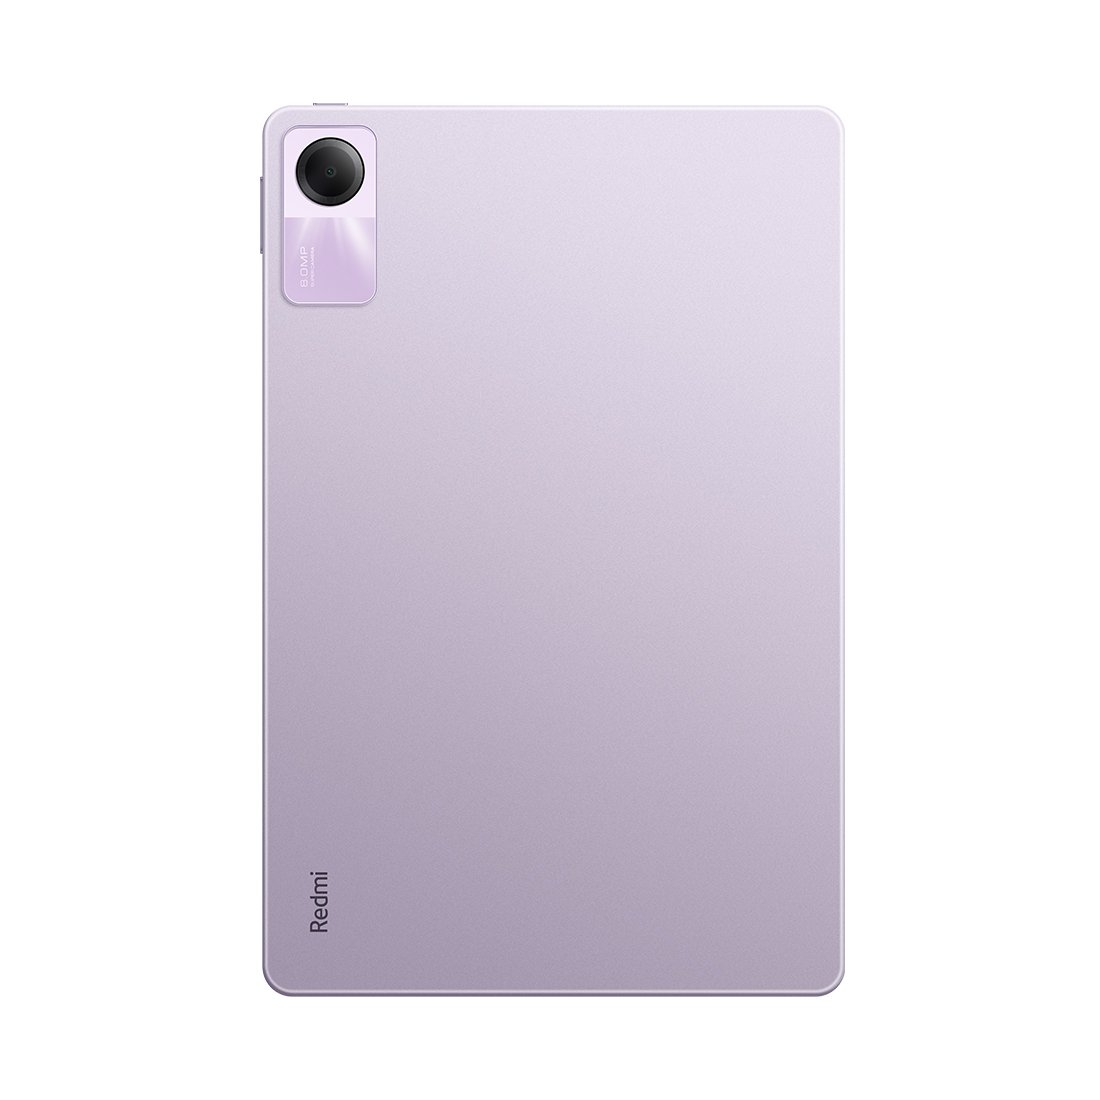 Xiaomi Redmi Pad SE Tablet review - Downgrade instead of improvement? -   Reviews